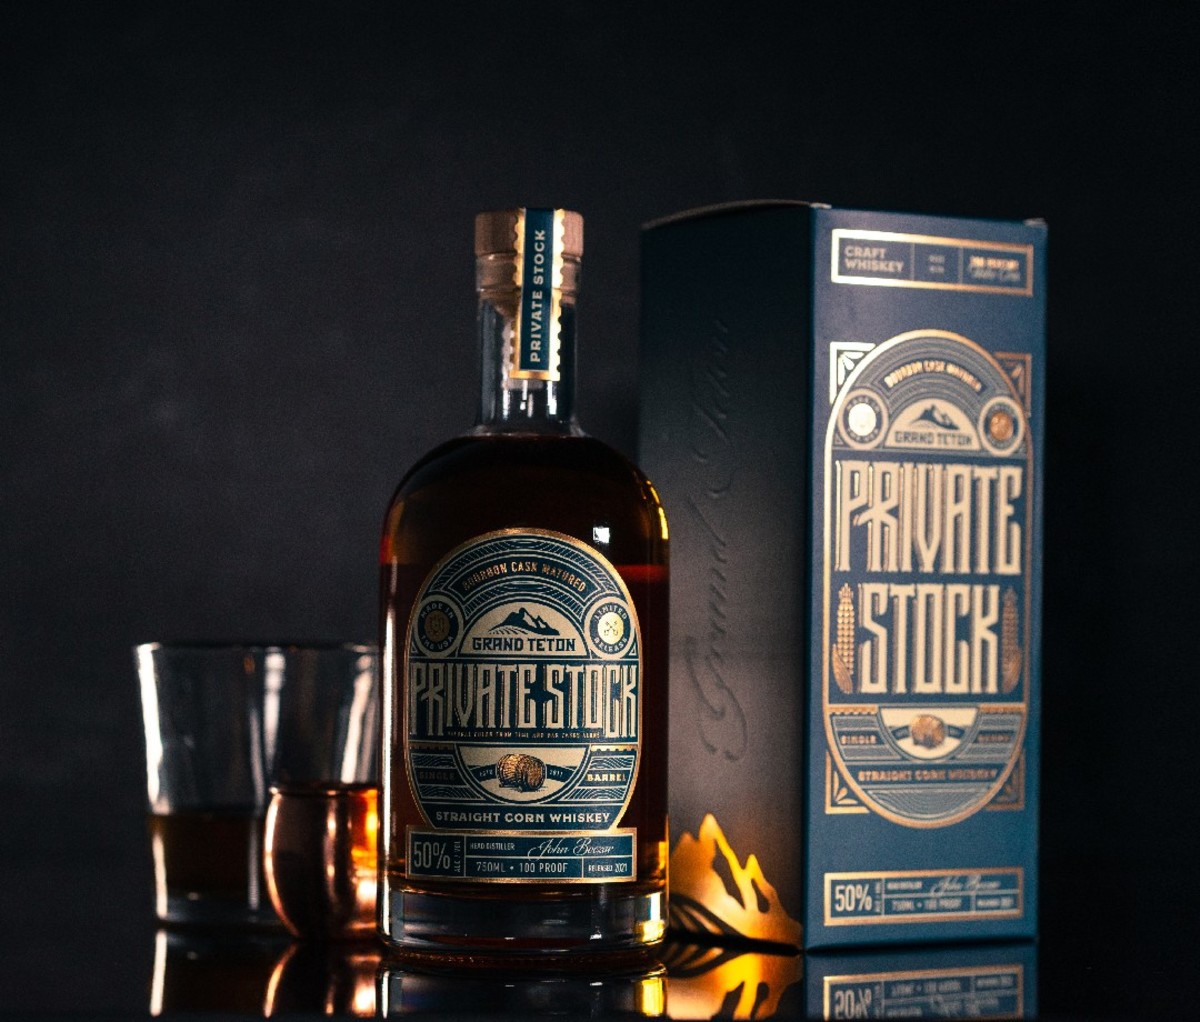 Grand Teton Private Stock Straight Corn Whiskey